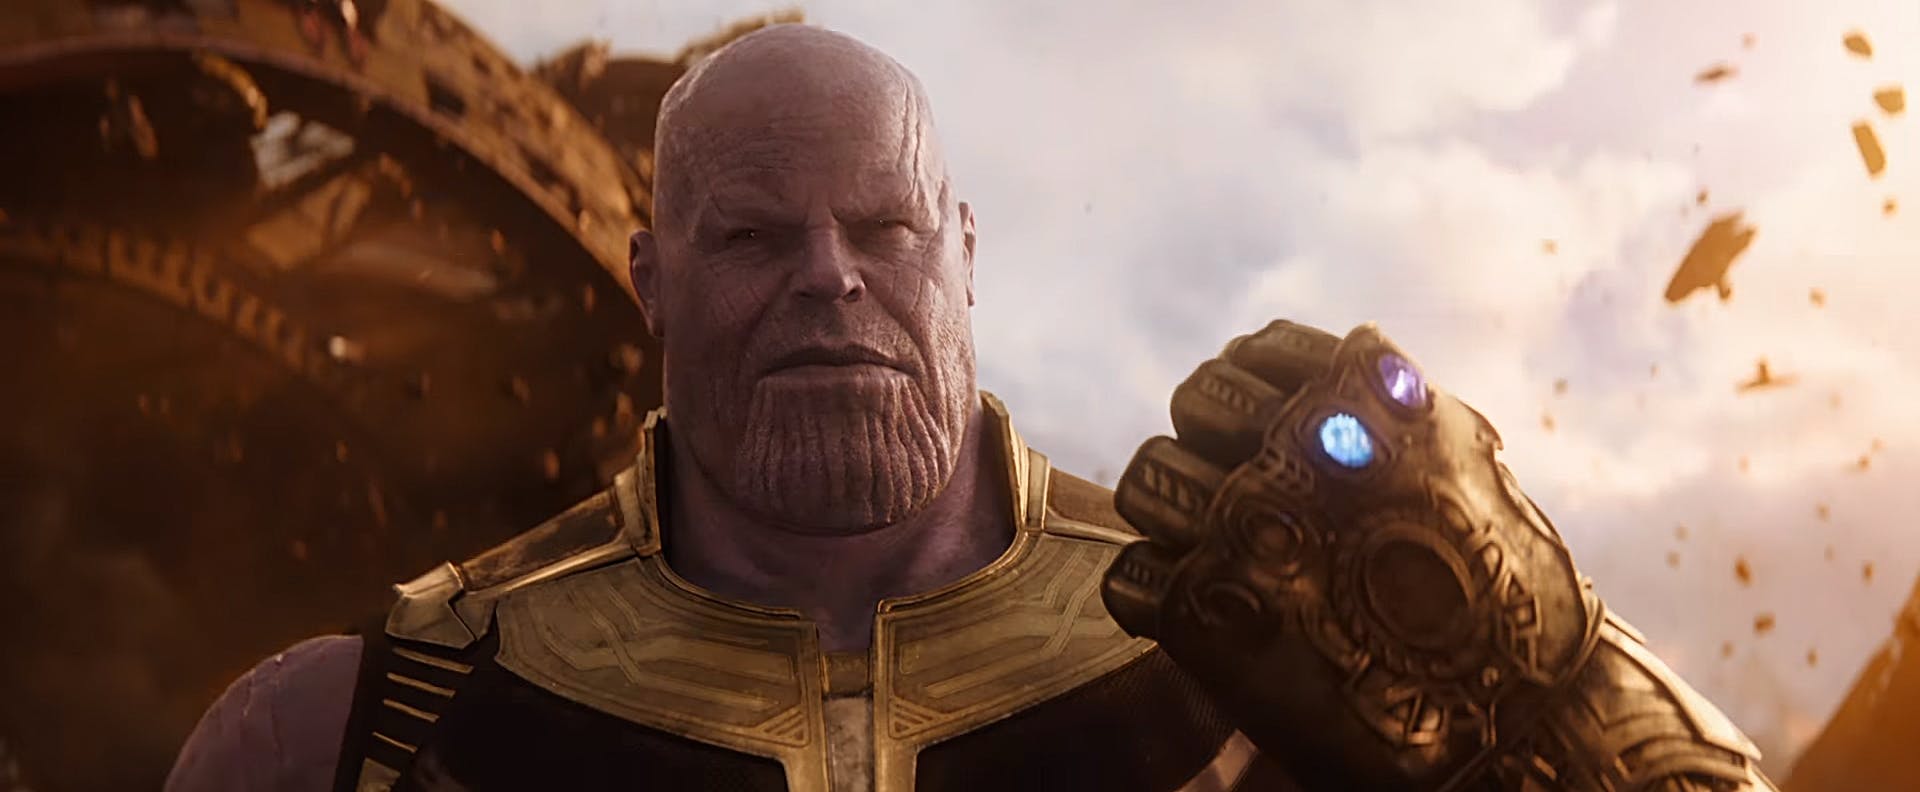 mcu phase 4 - Thanos Infinity War